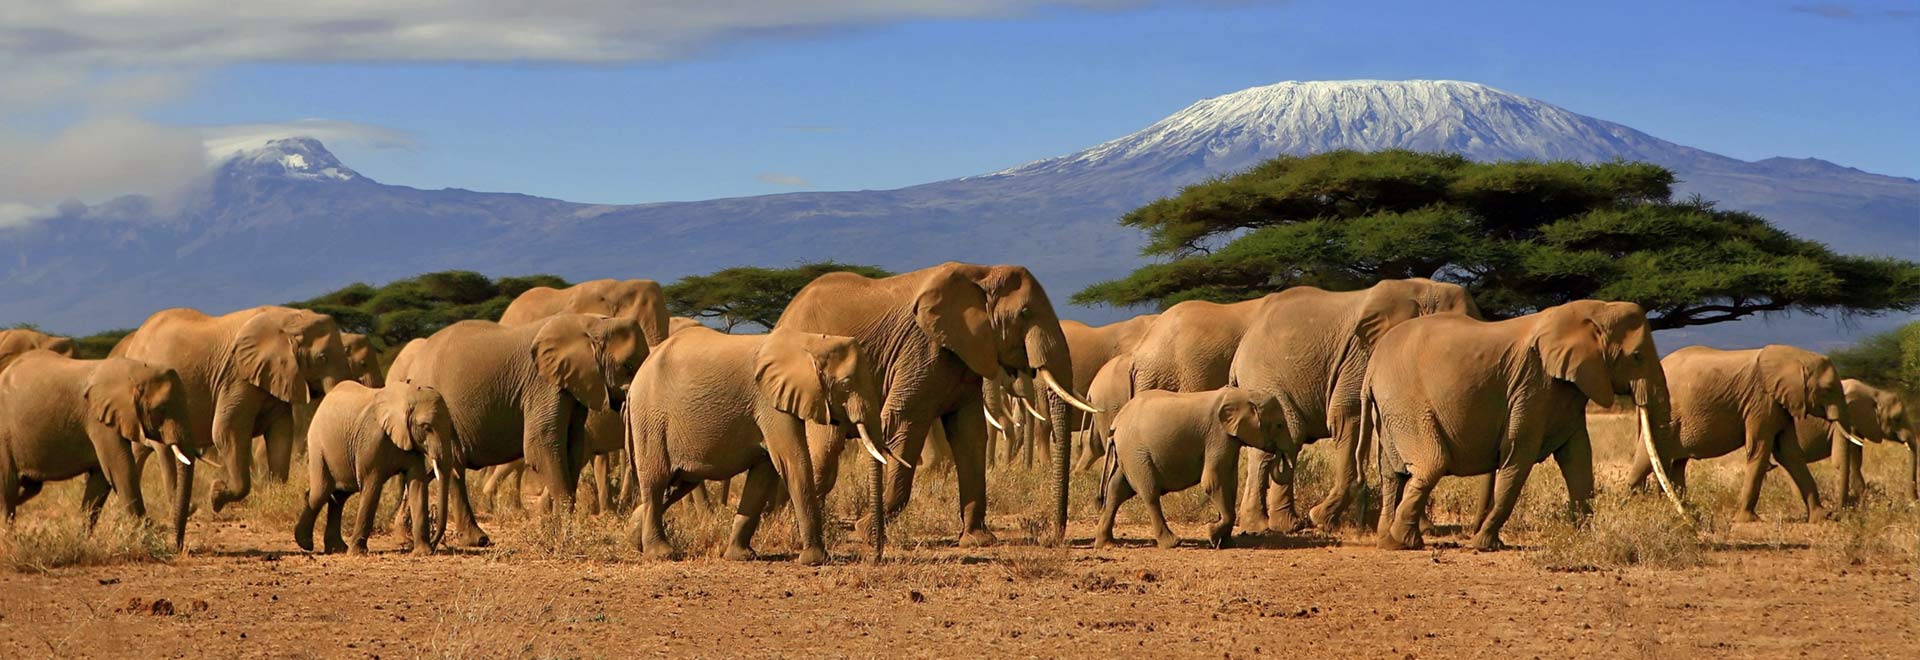 Africa East Africa Kenya Tanzania Wildlife Safari Elephants Mt Kilimanjaro MH